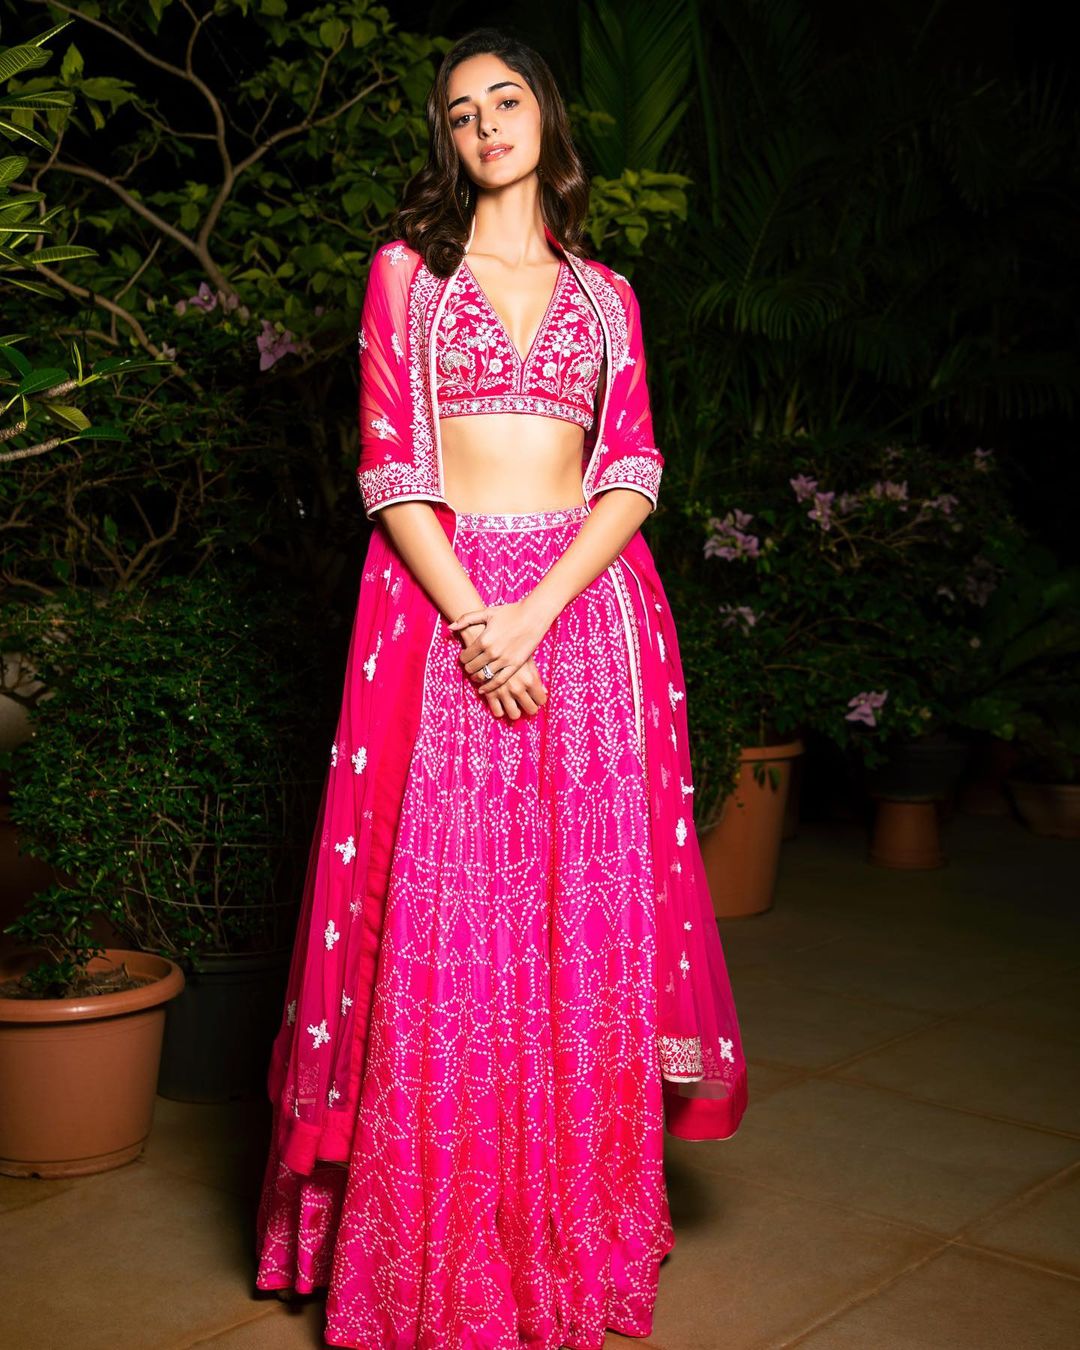 Ananya Panday's embellished pink lehenga is pretty and vibrant